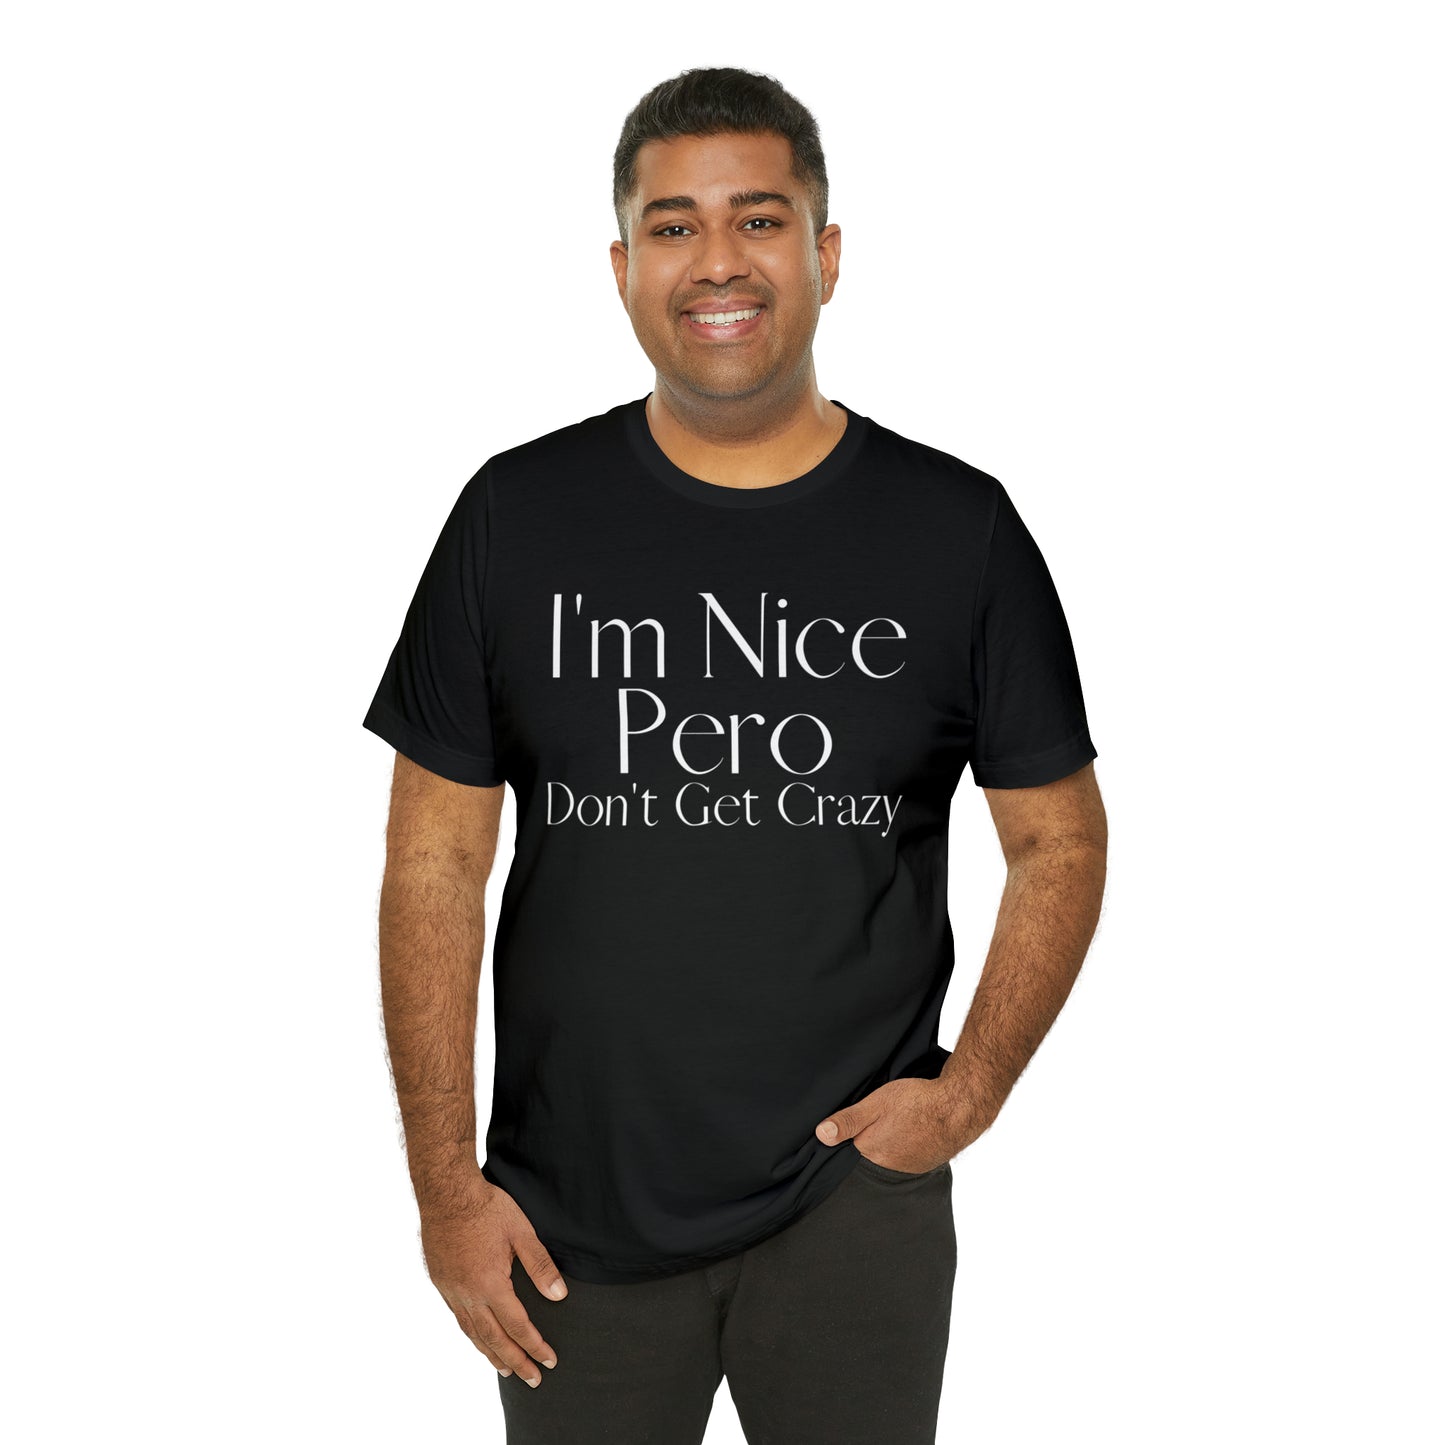 I'm Nice Pero Don't Get Crazy, Shirt